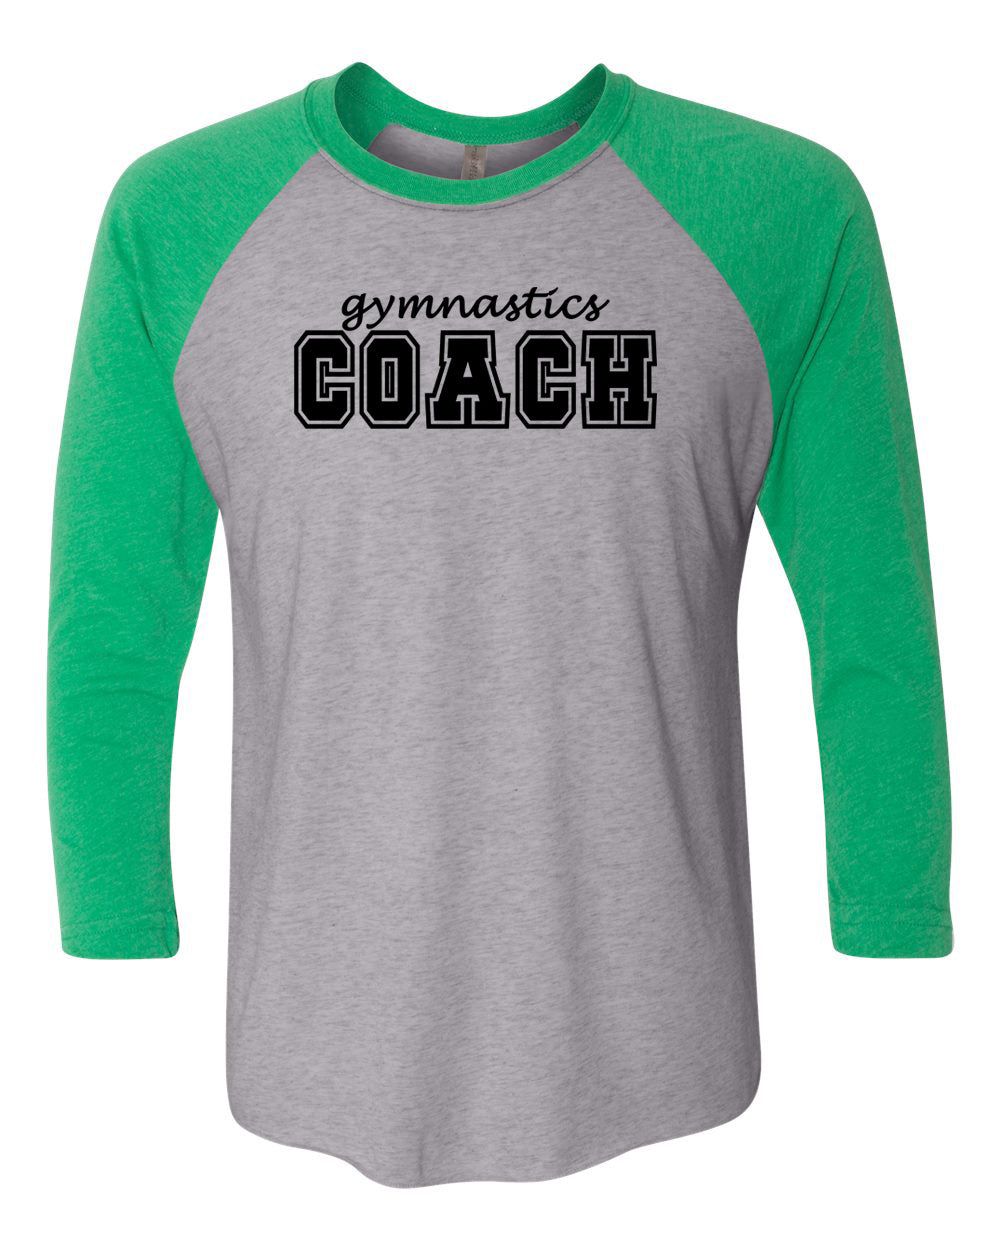 Gymnastics Coach Adult 3/4 Sleeve Raglan T-Shirt